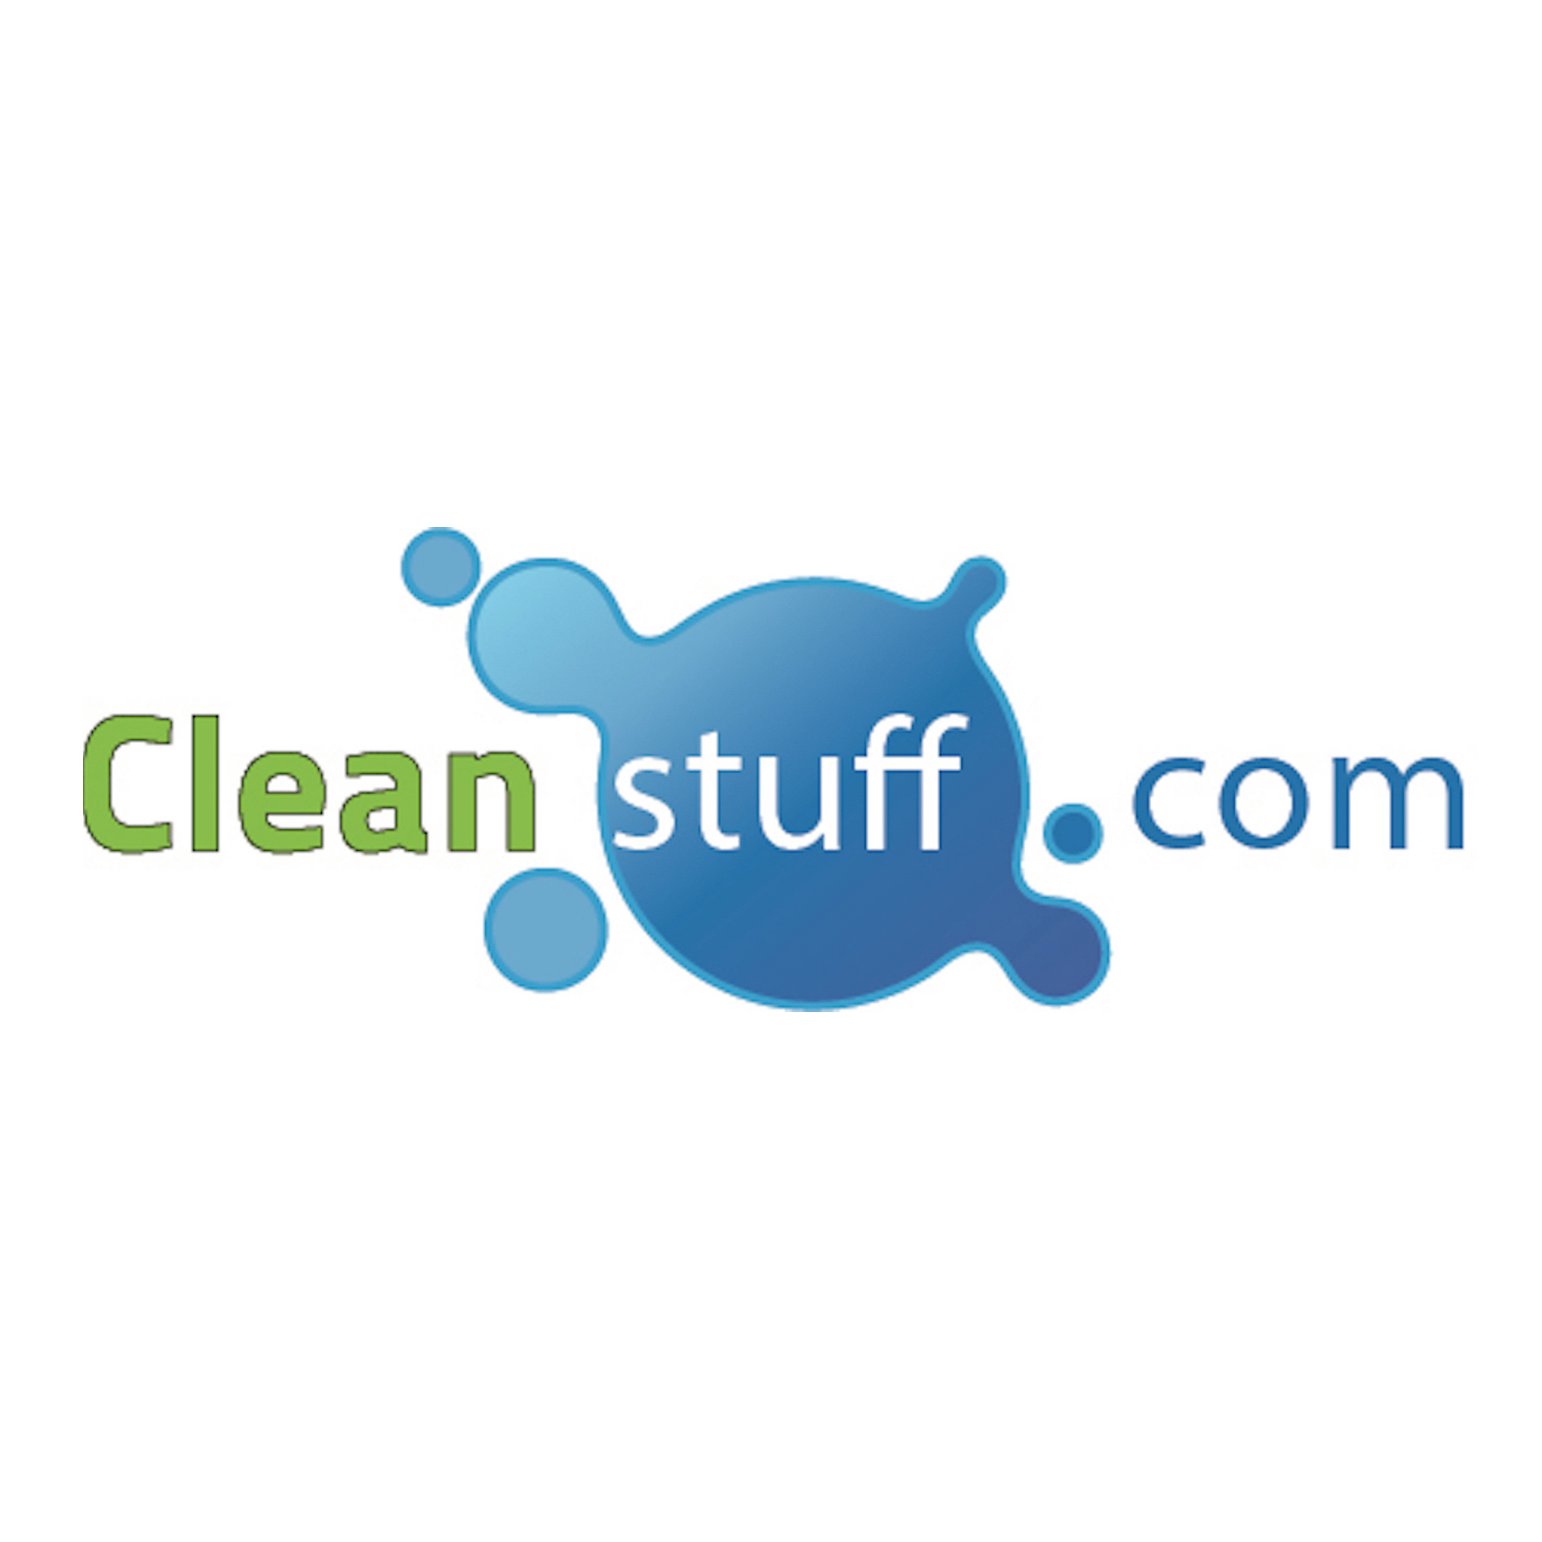 Cleanstuff.com